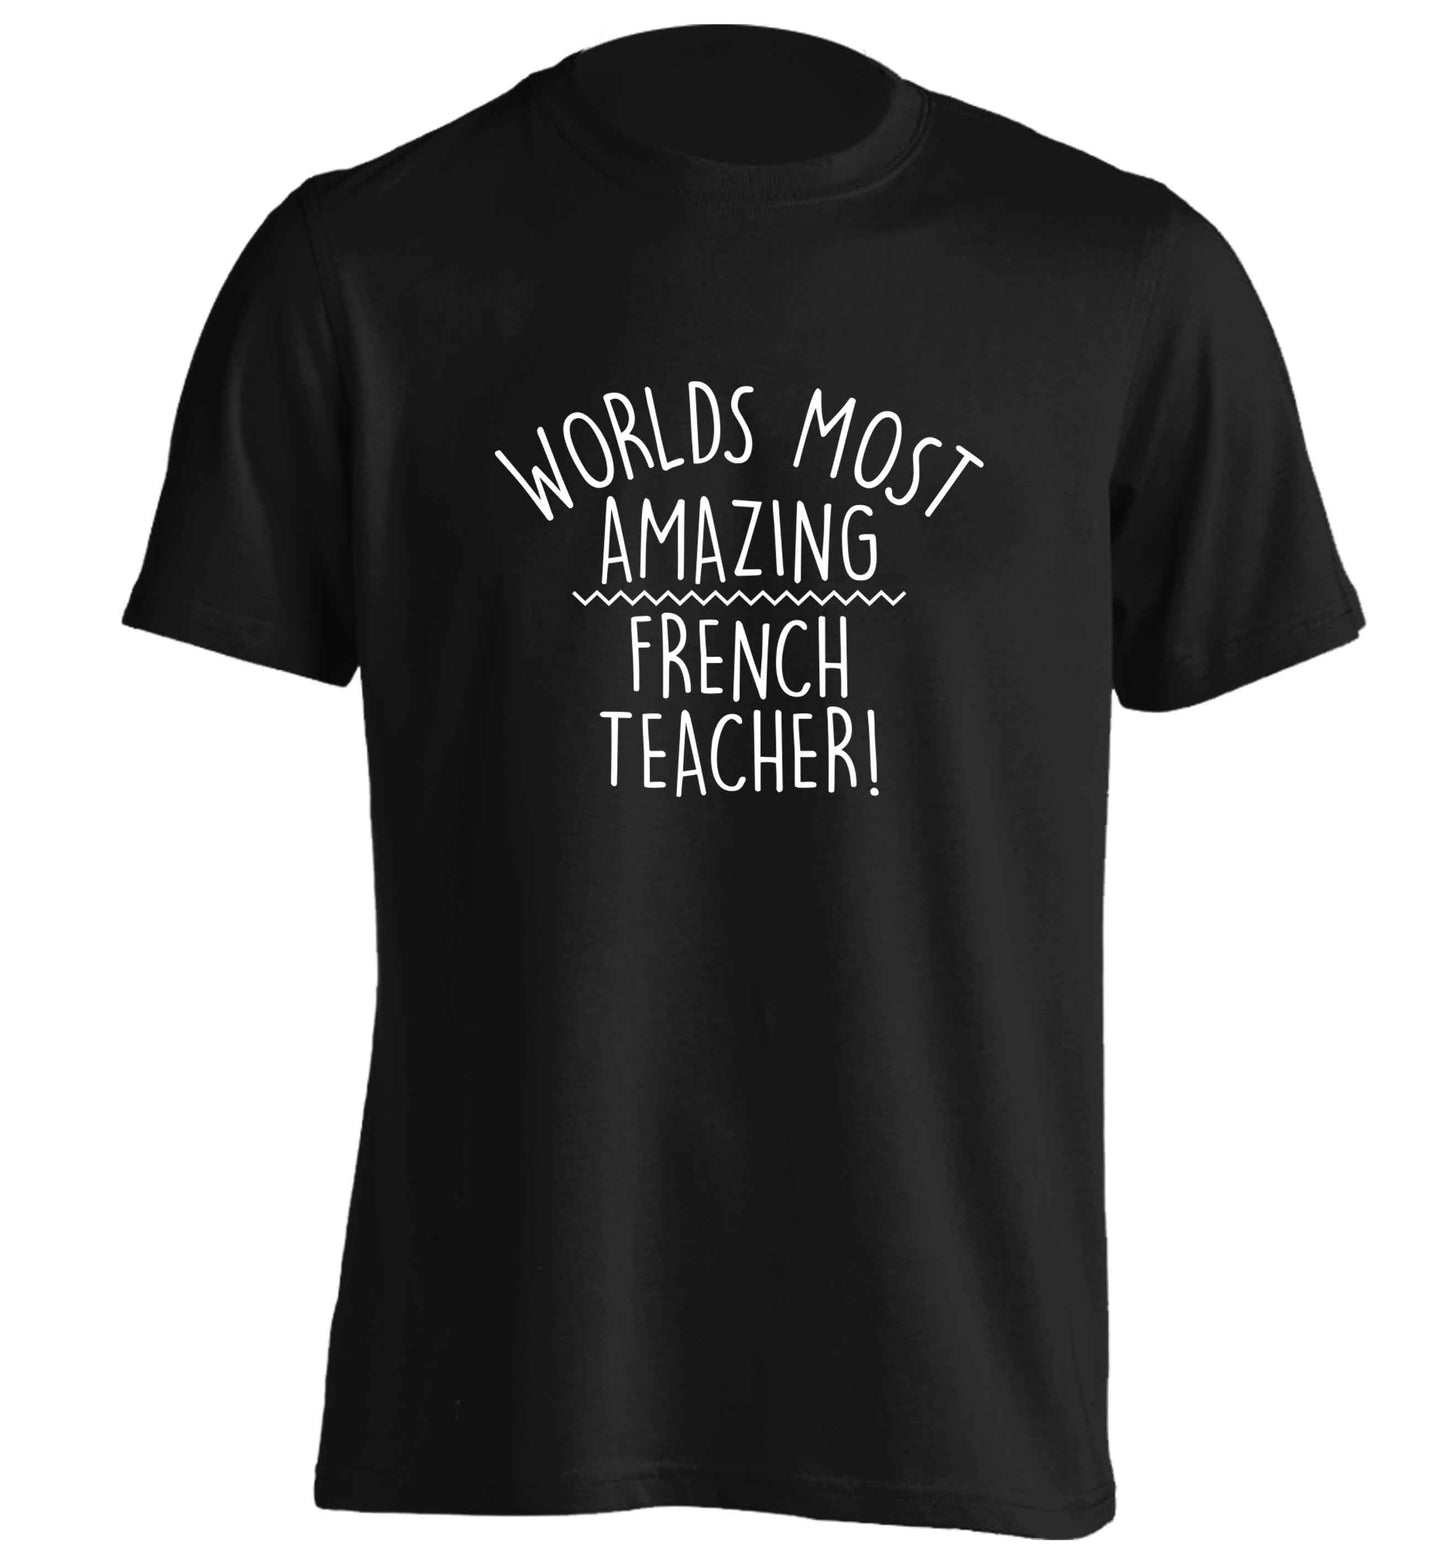 Worlds most amazing French teacher adults unisex black Tshirt 2XL